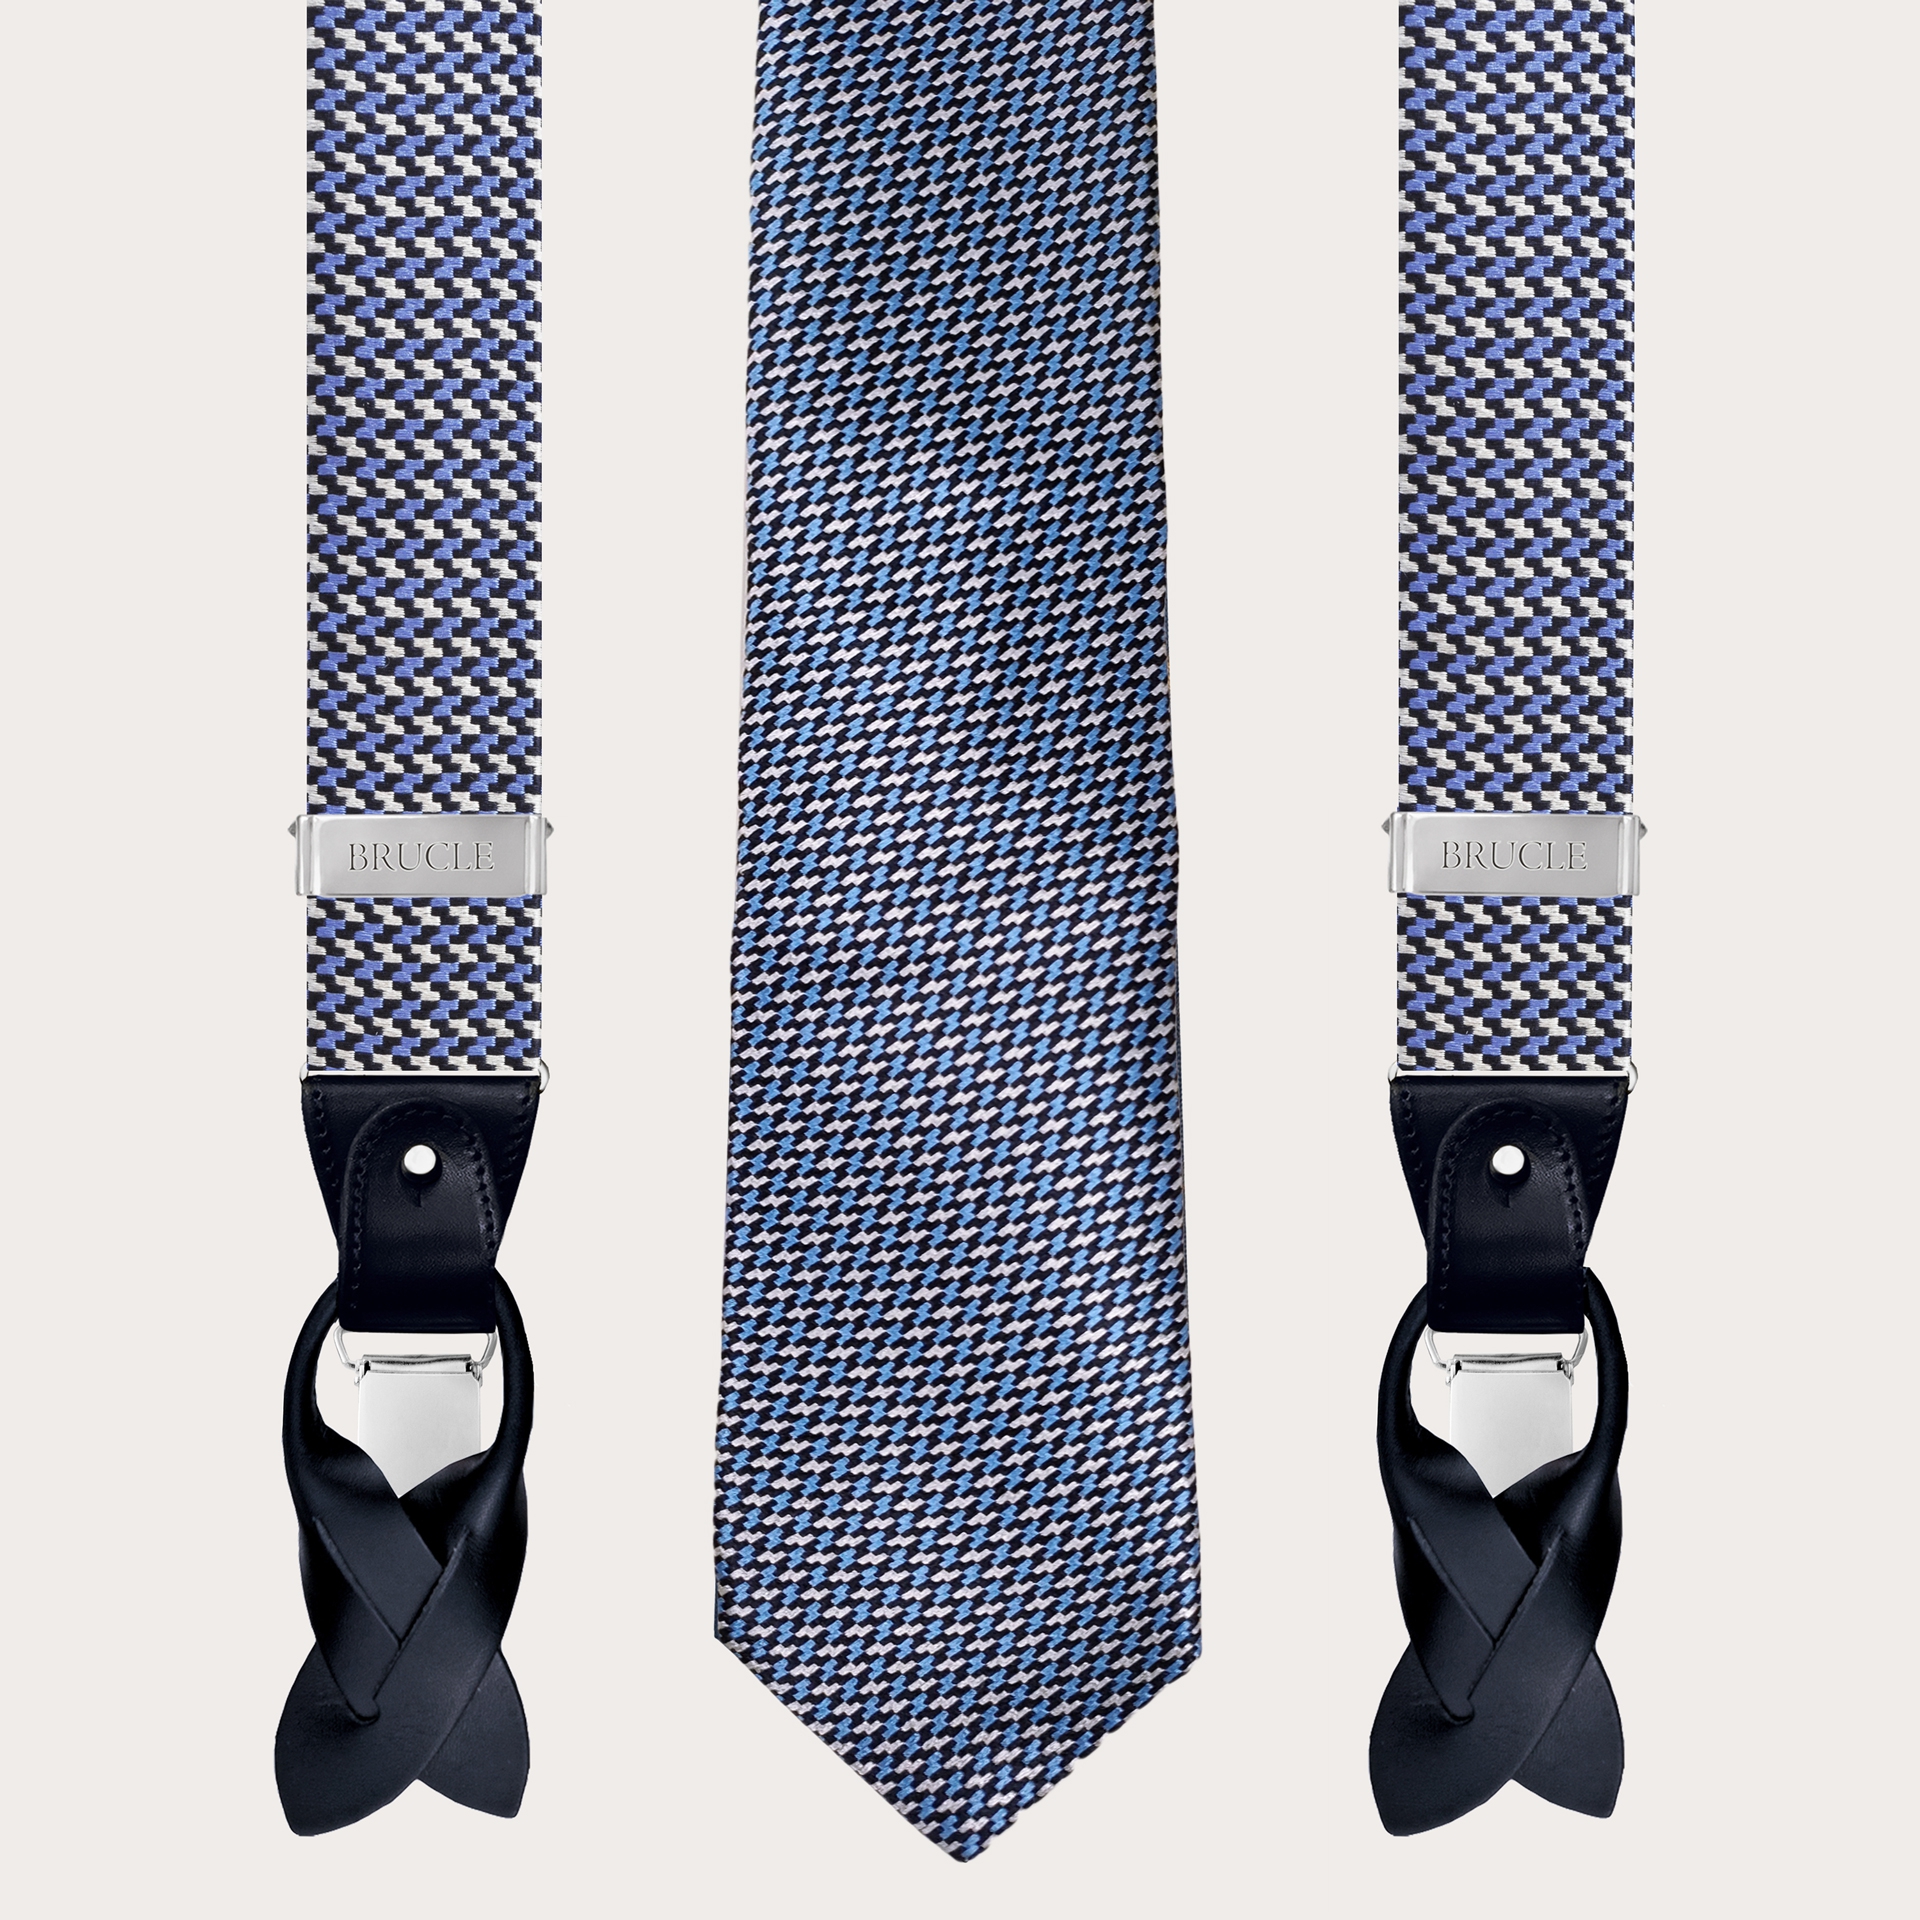 Set elegante uomo bretelle e cravatta in seta, fantasia geometrica azzurro e argento